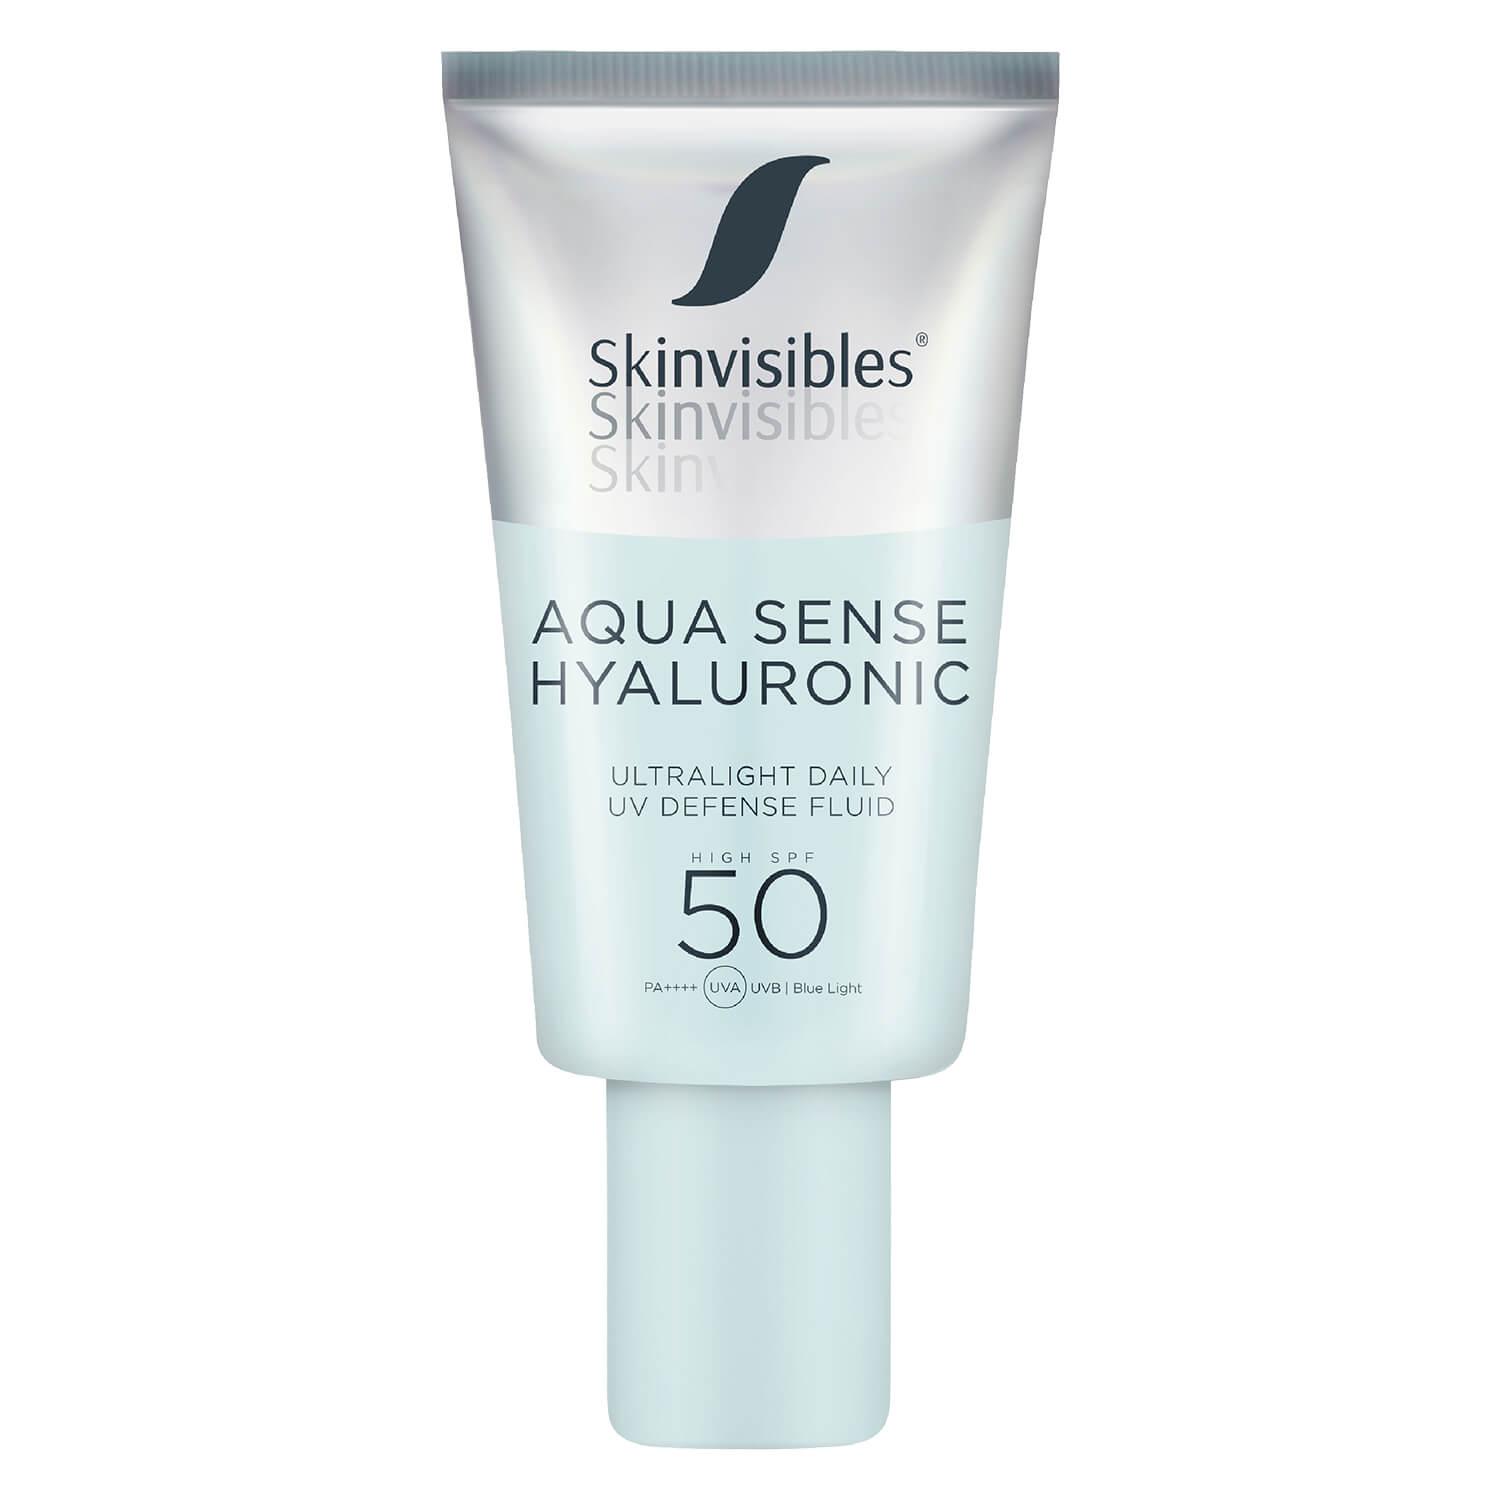 Skinvisibles - Aqua Sense Hyaluronic Fluid SPF 50